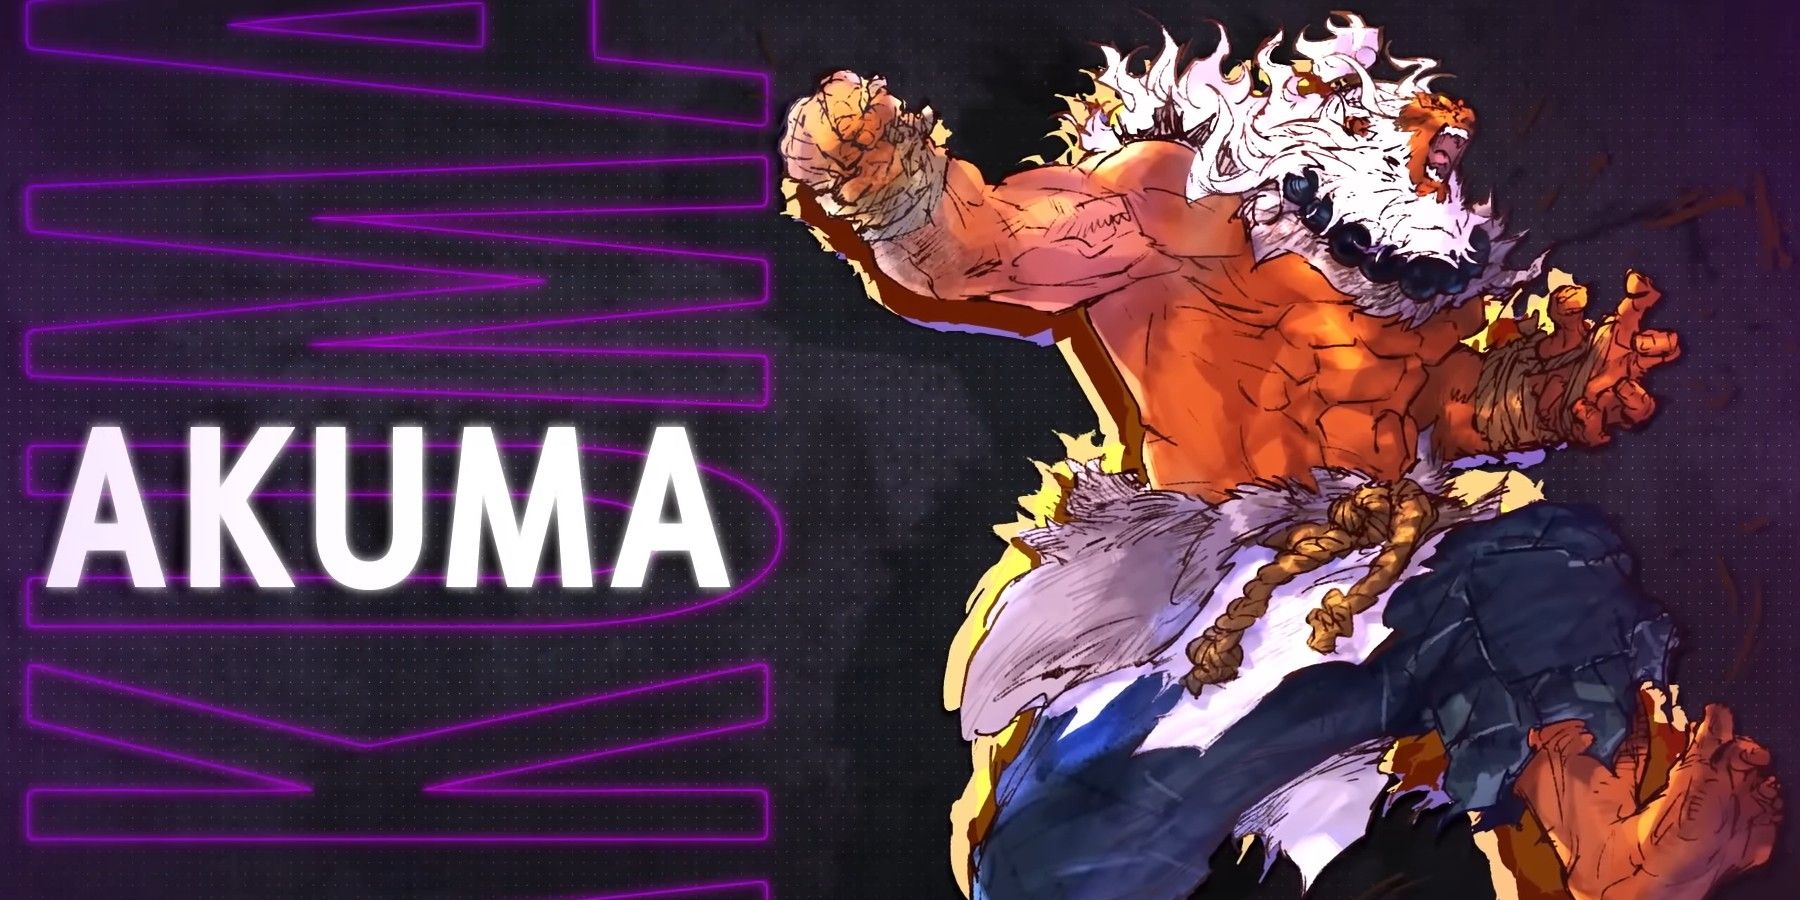 Who Is Akuma In Street Fighter?